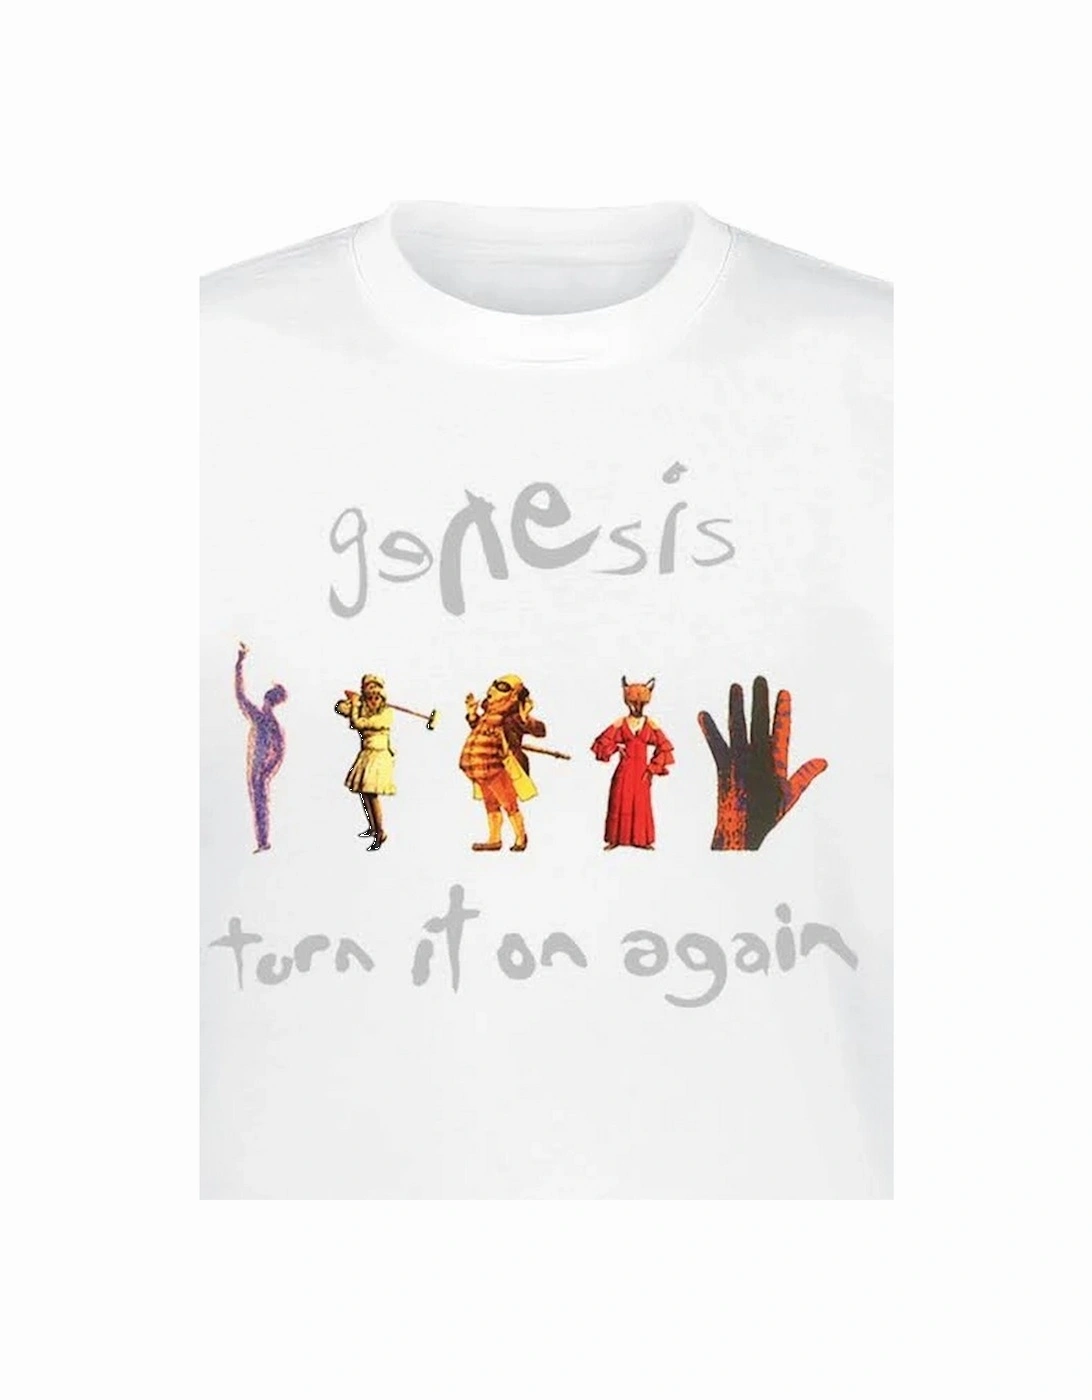 Unisex Adult Turn It On Again T-Shirt